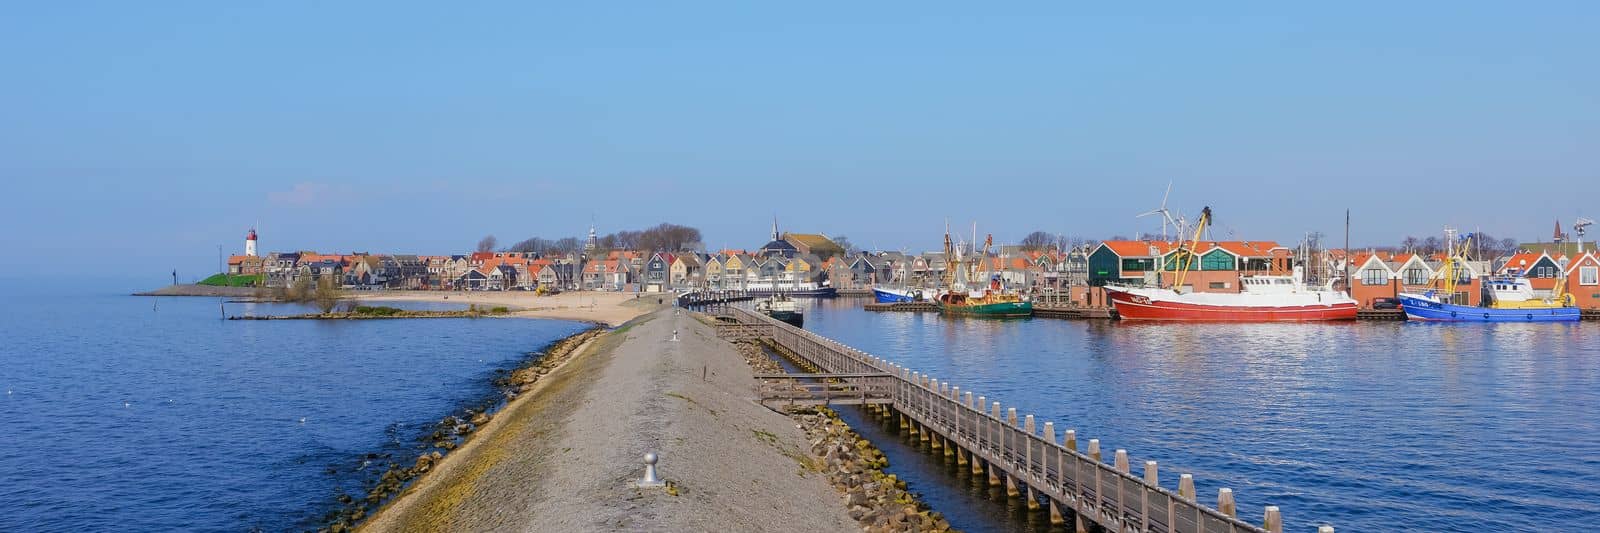 Urk Flevoland Netherlands May 2017 fishing harbor of Urk Holland with fishing boats Fishing village Urk by fokkebok